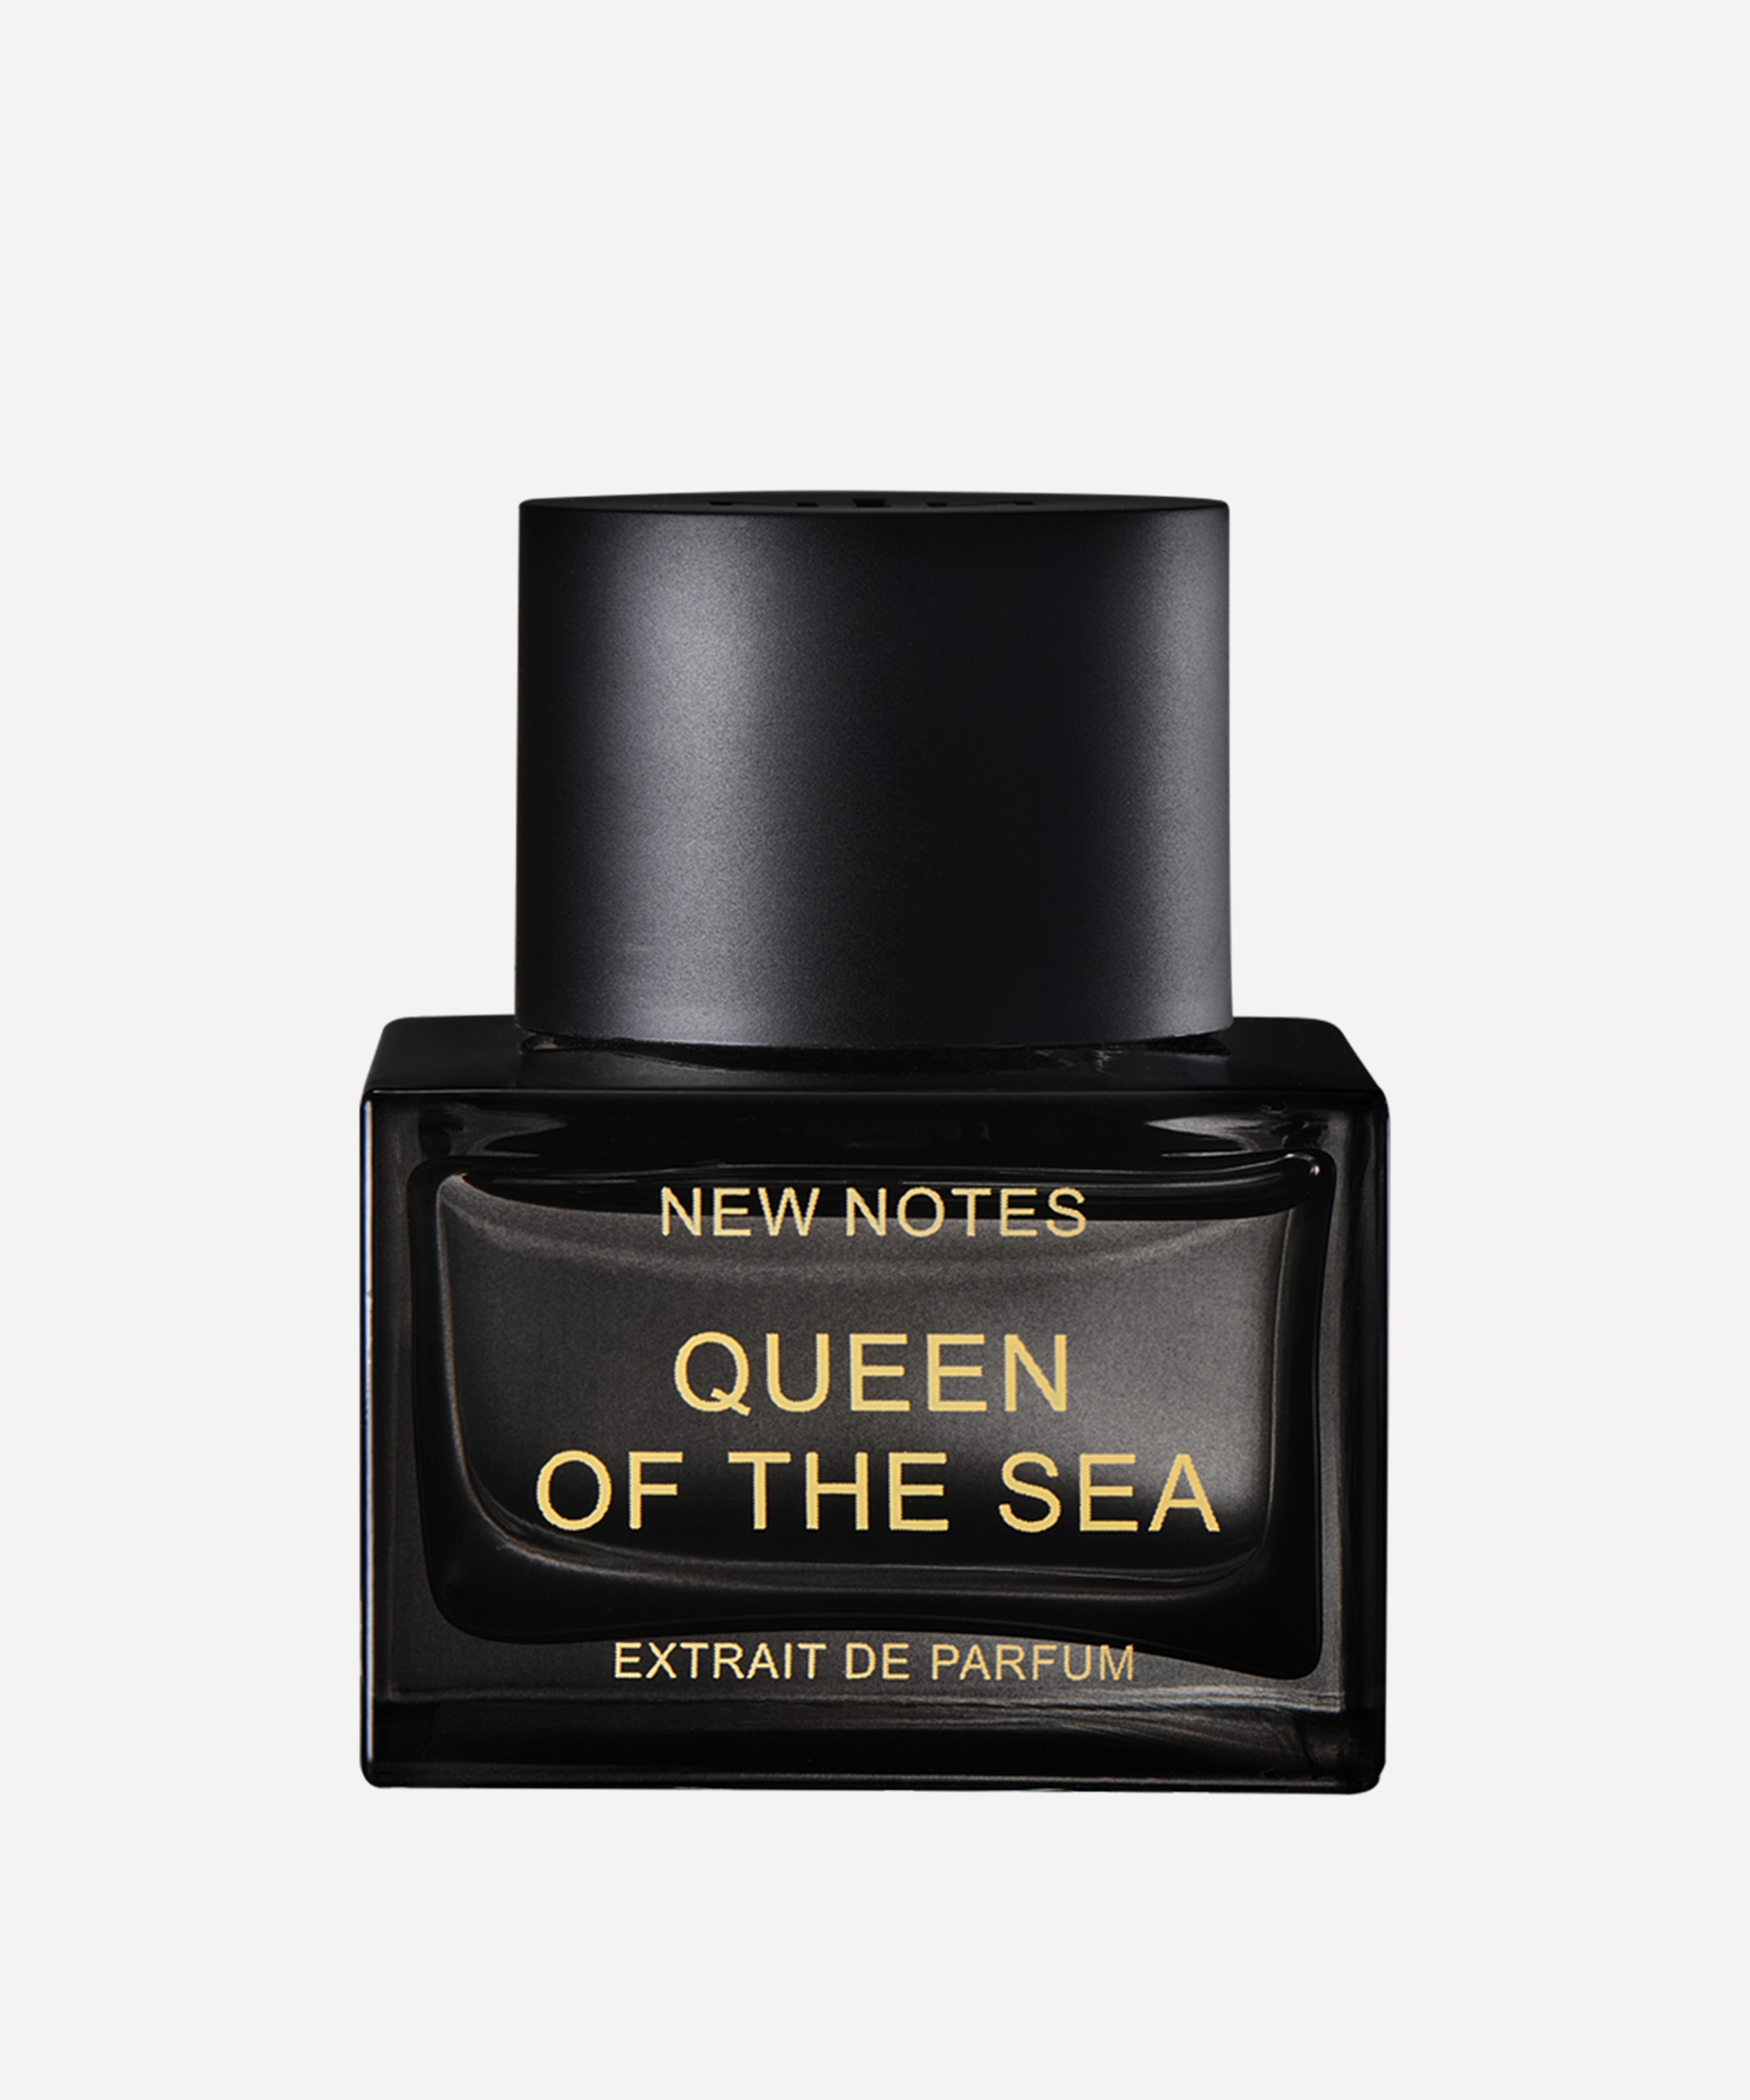 New Notes - Queen of the Sea Extrait de Parfum 50ml image number 0